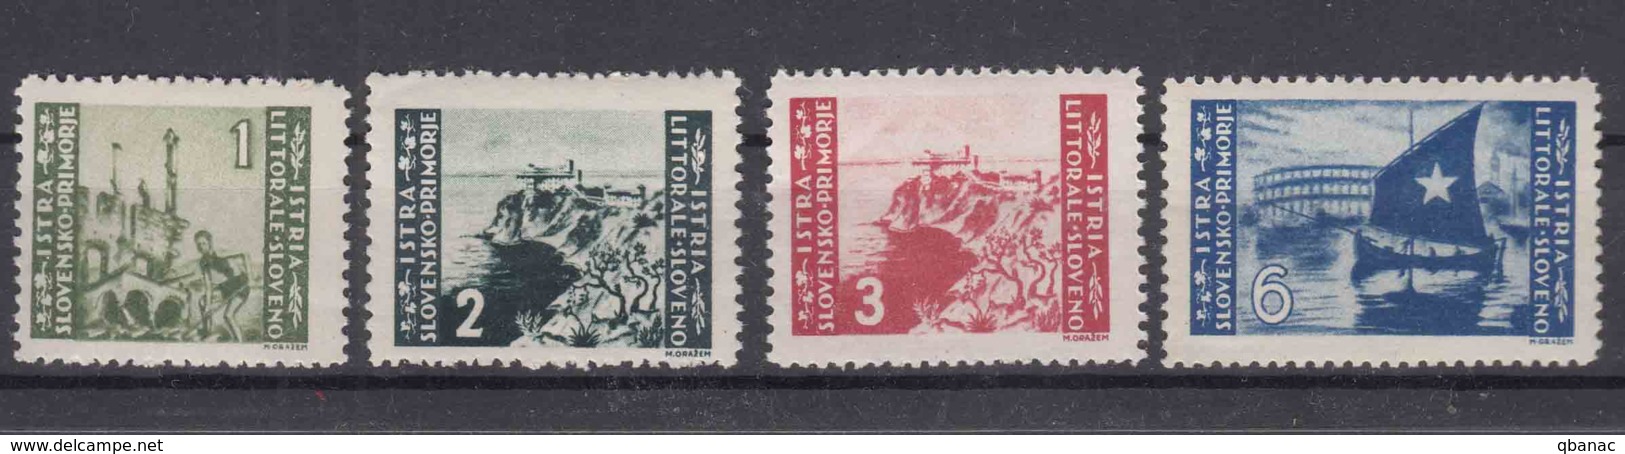 Istria Litorale Yugoslavia Occupation, 1946 Sassone#63-66 Complete Set, Mint Never Hinged - Ocu. Yugoslava: Istria